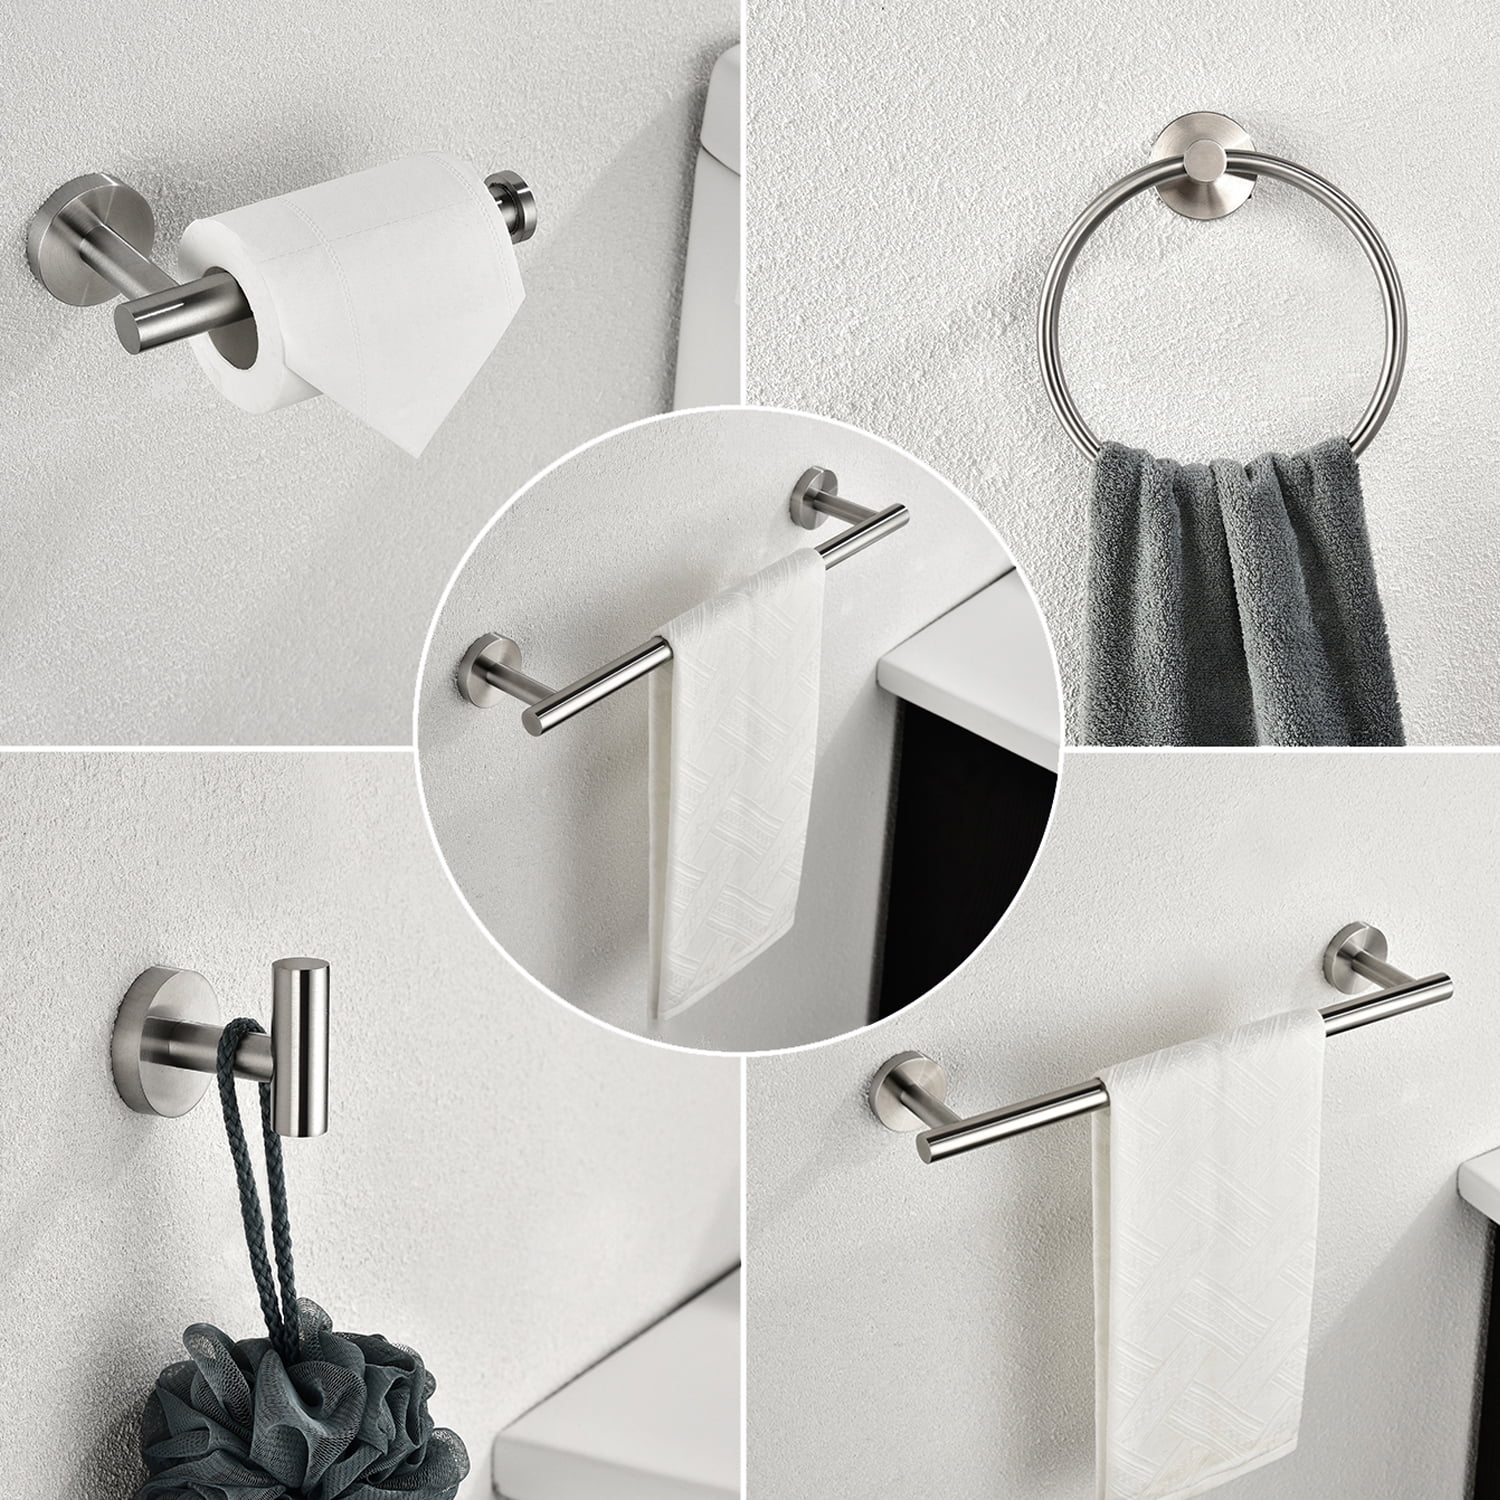 walmart toilet paper holder rod Chrome plated toilet paper holder with single rod towel rack accessory